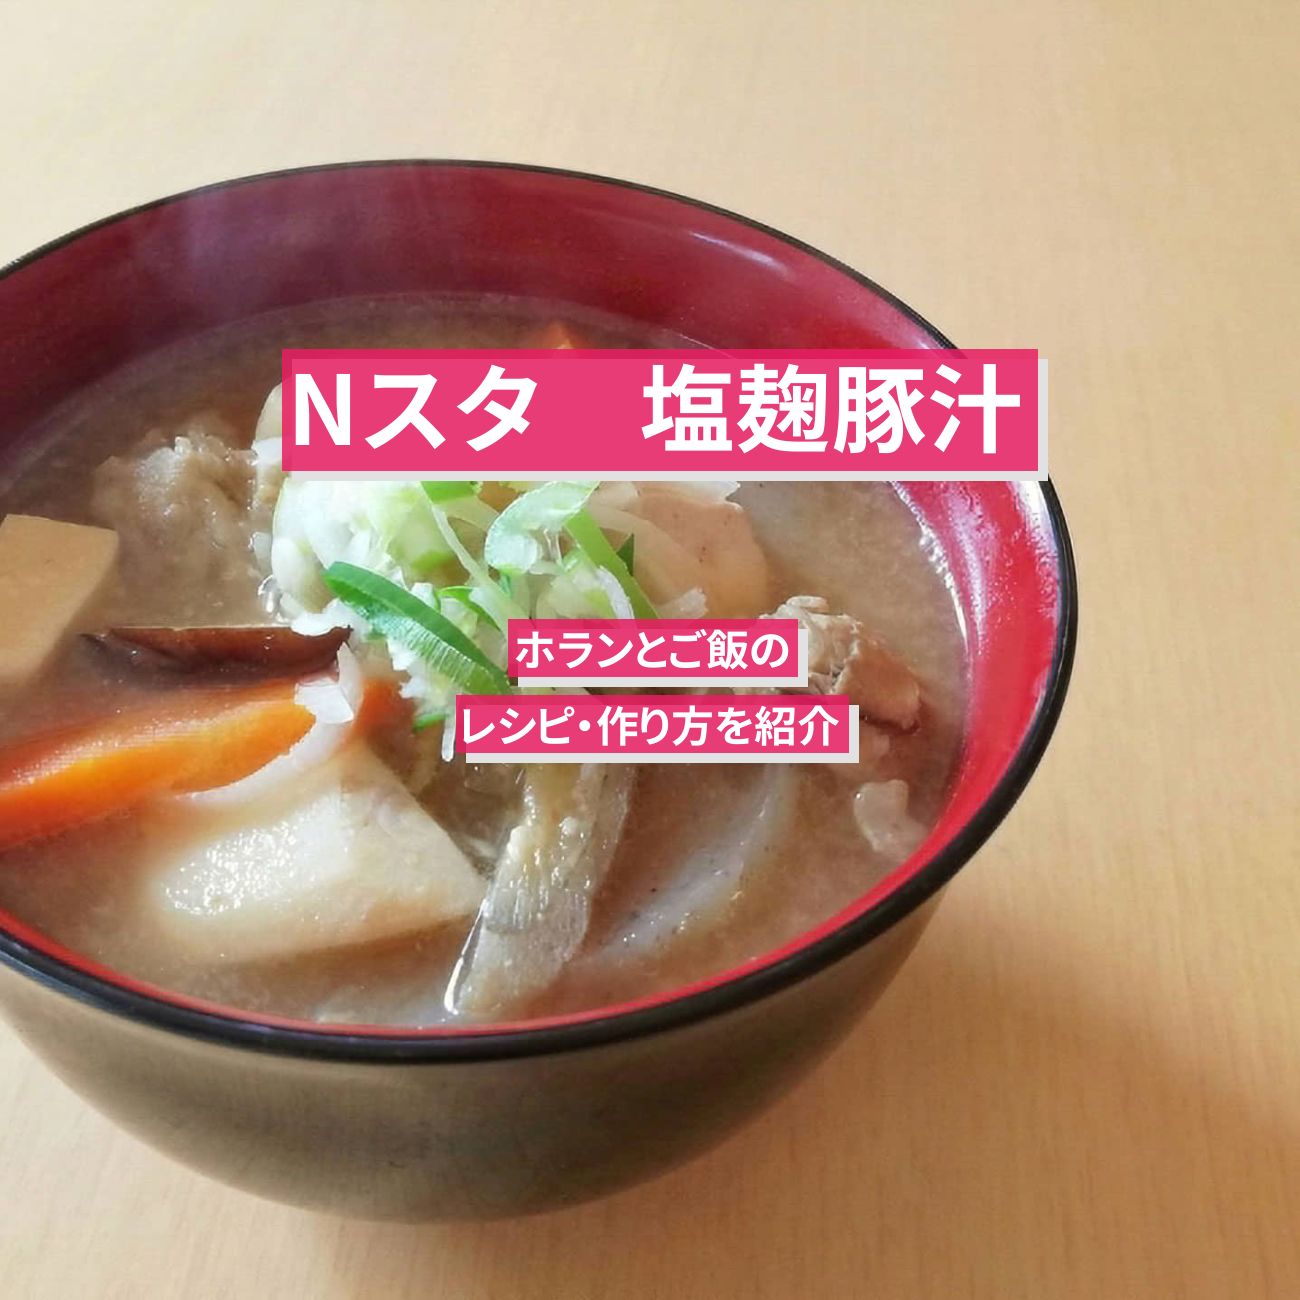 【Nスタ】『塩麹豚汁』ホランとご飯のレシピ・作り方を紹介